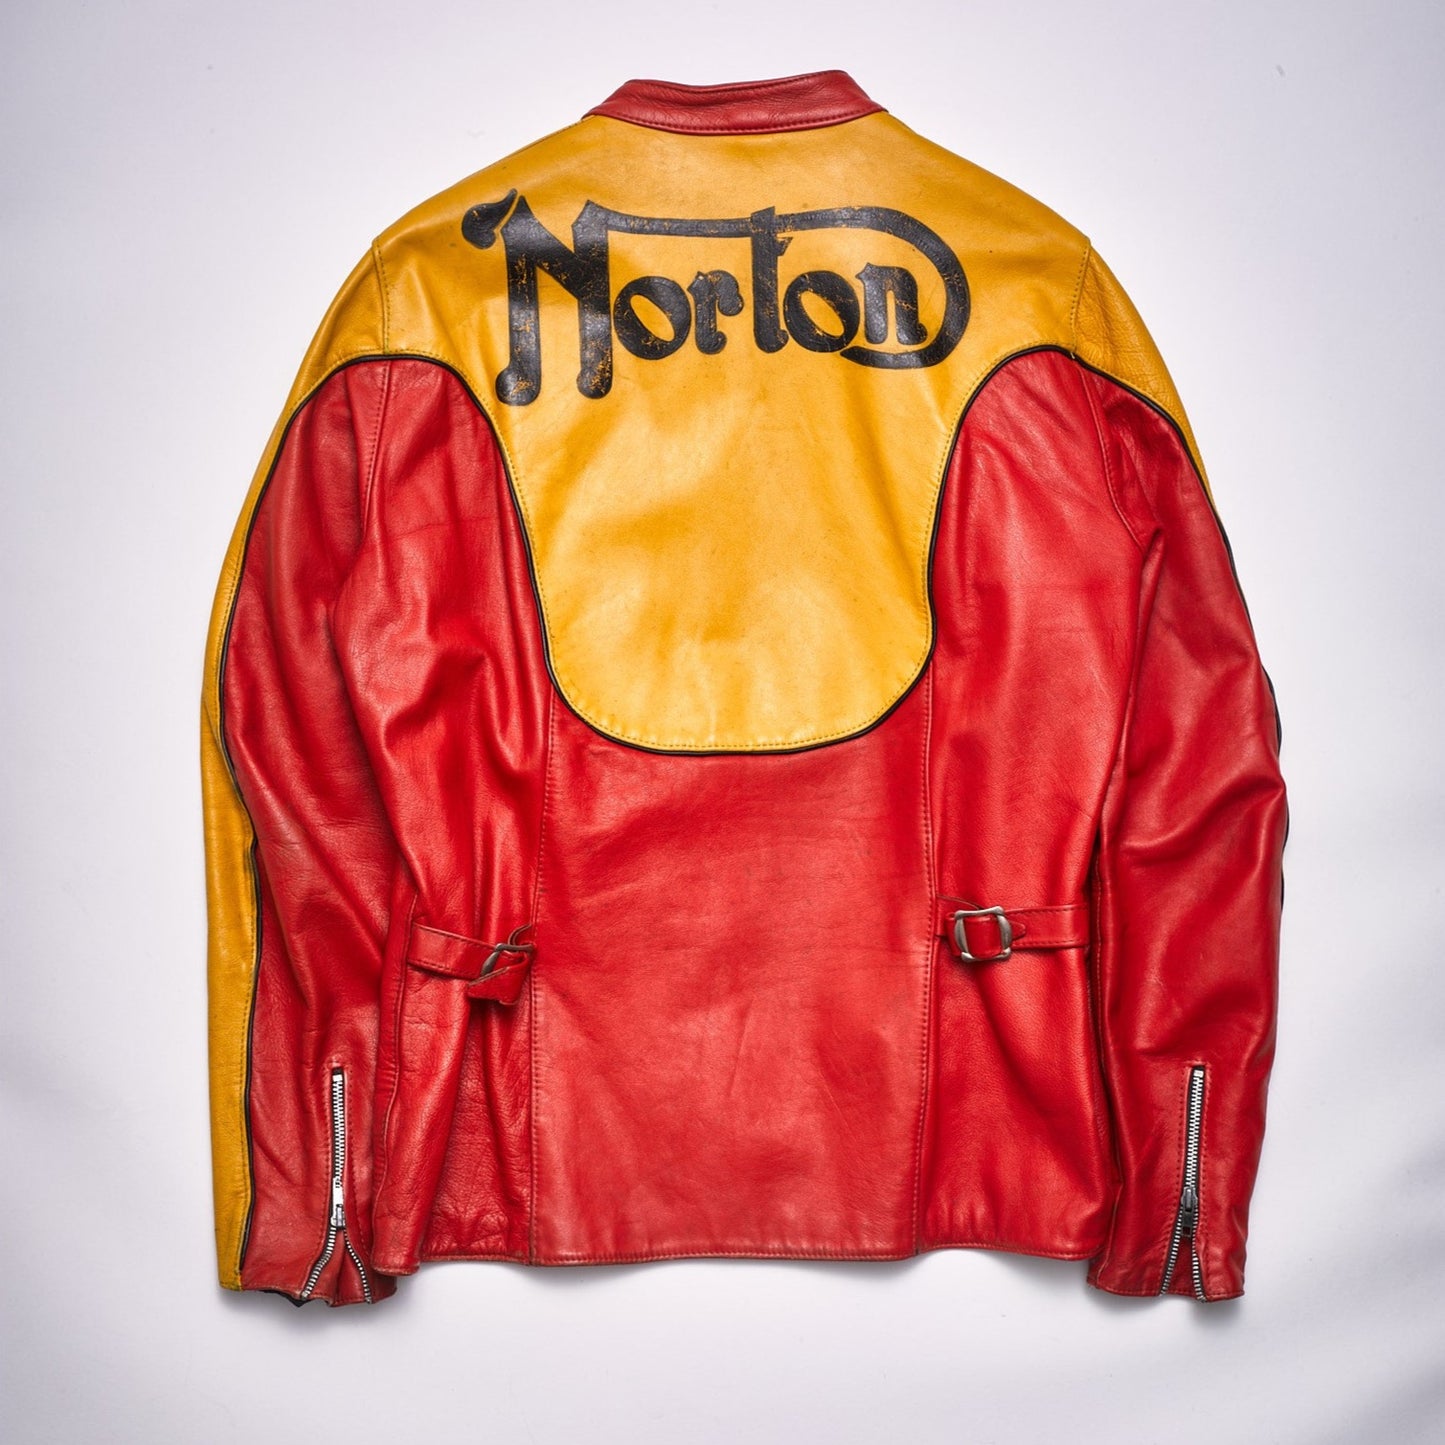 Norton vs. Honda Jacket